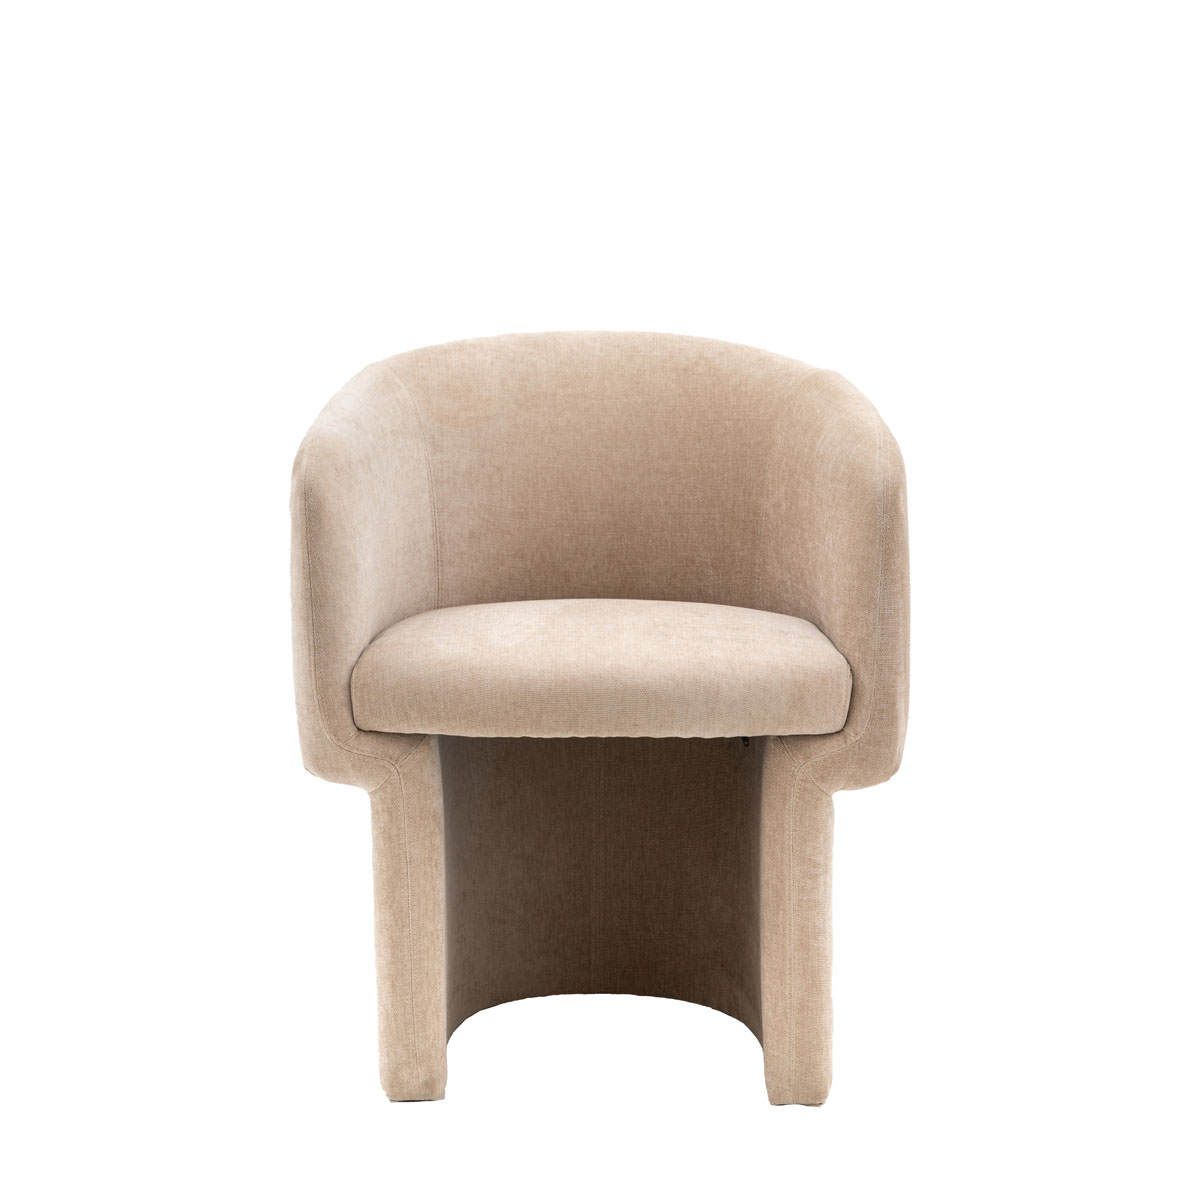 Holm Dining Chair Cream 640x630x750mm